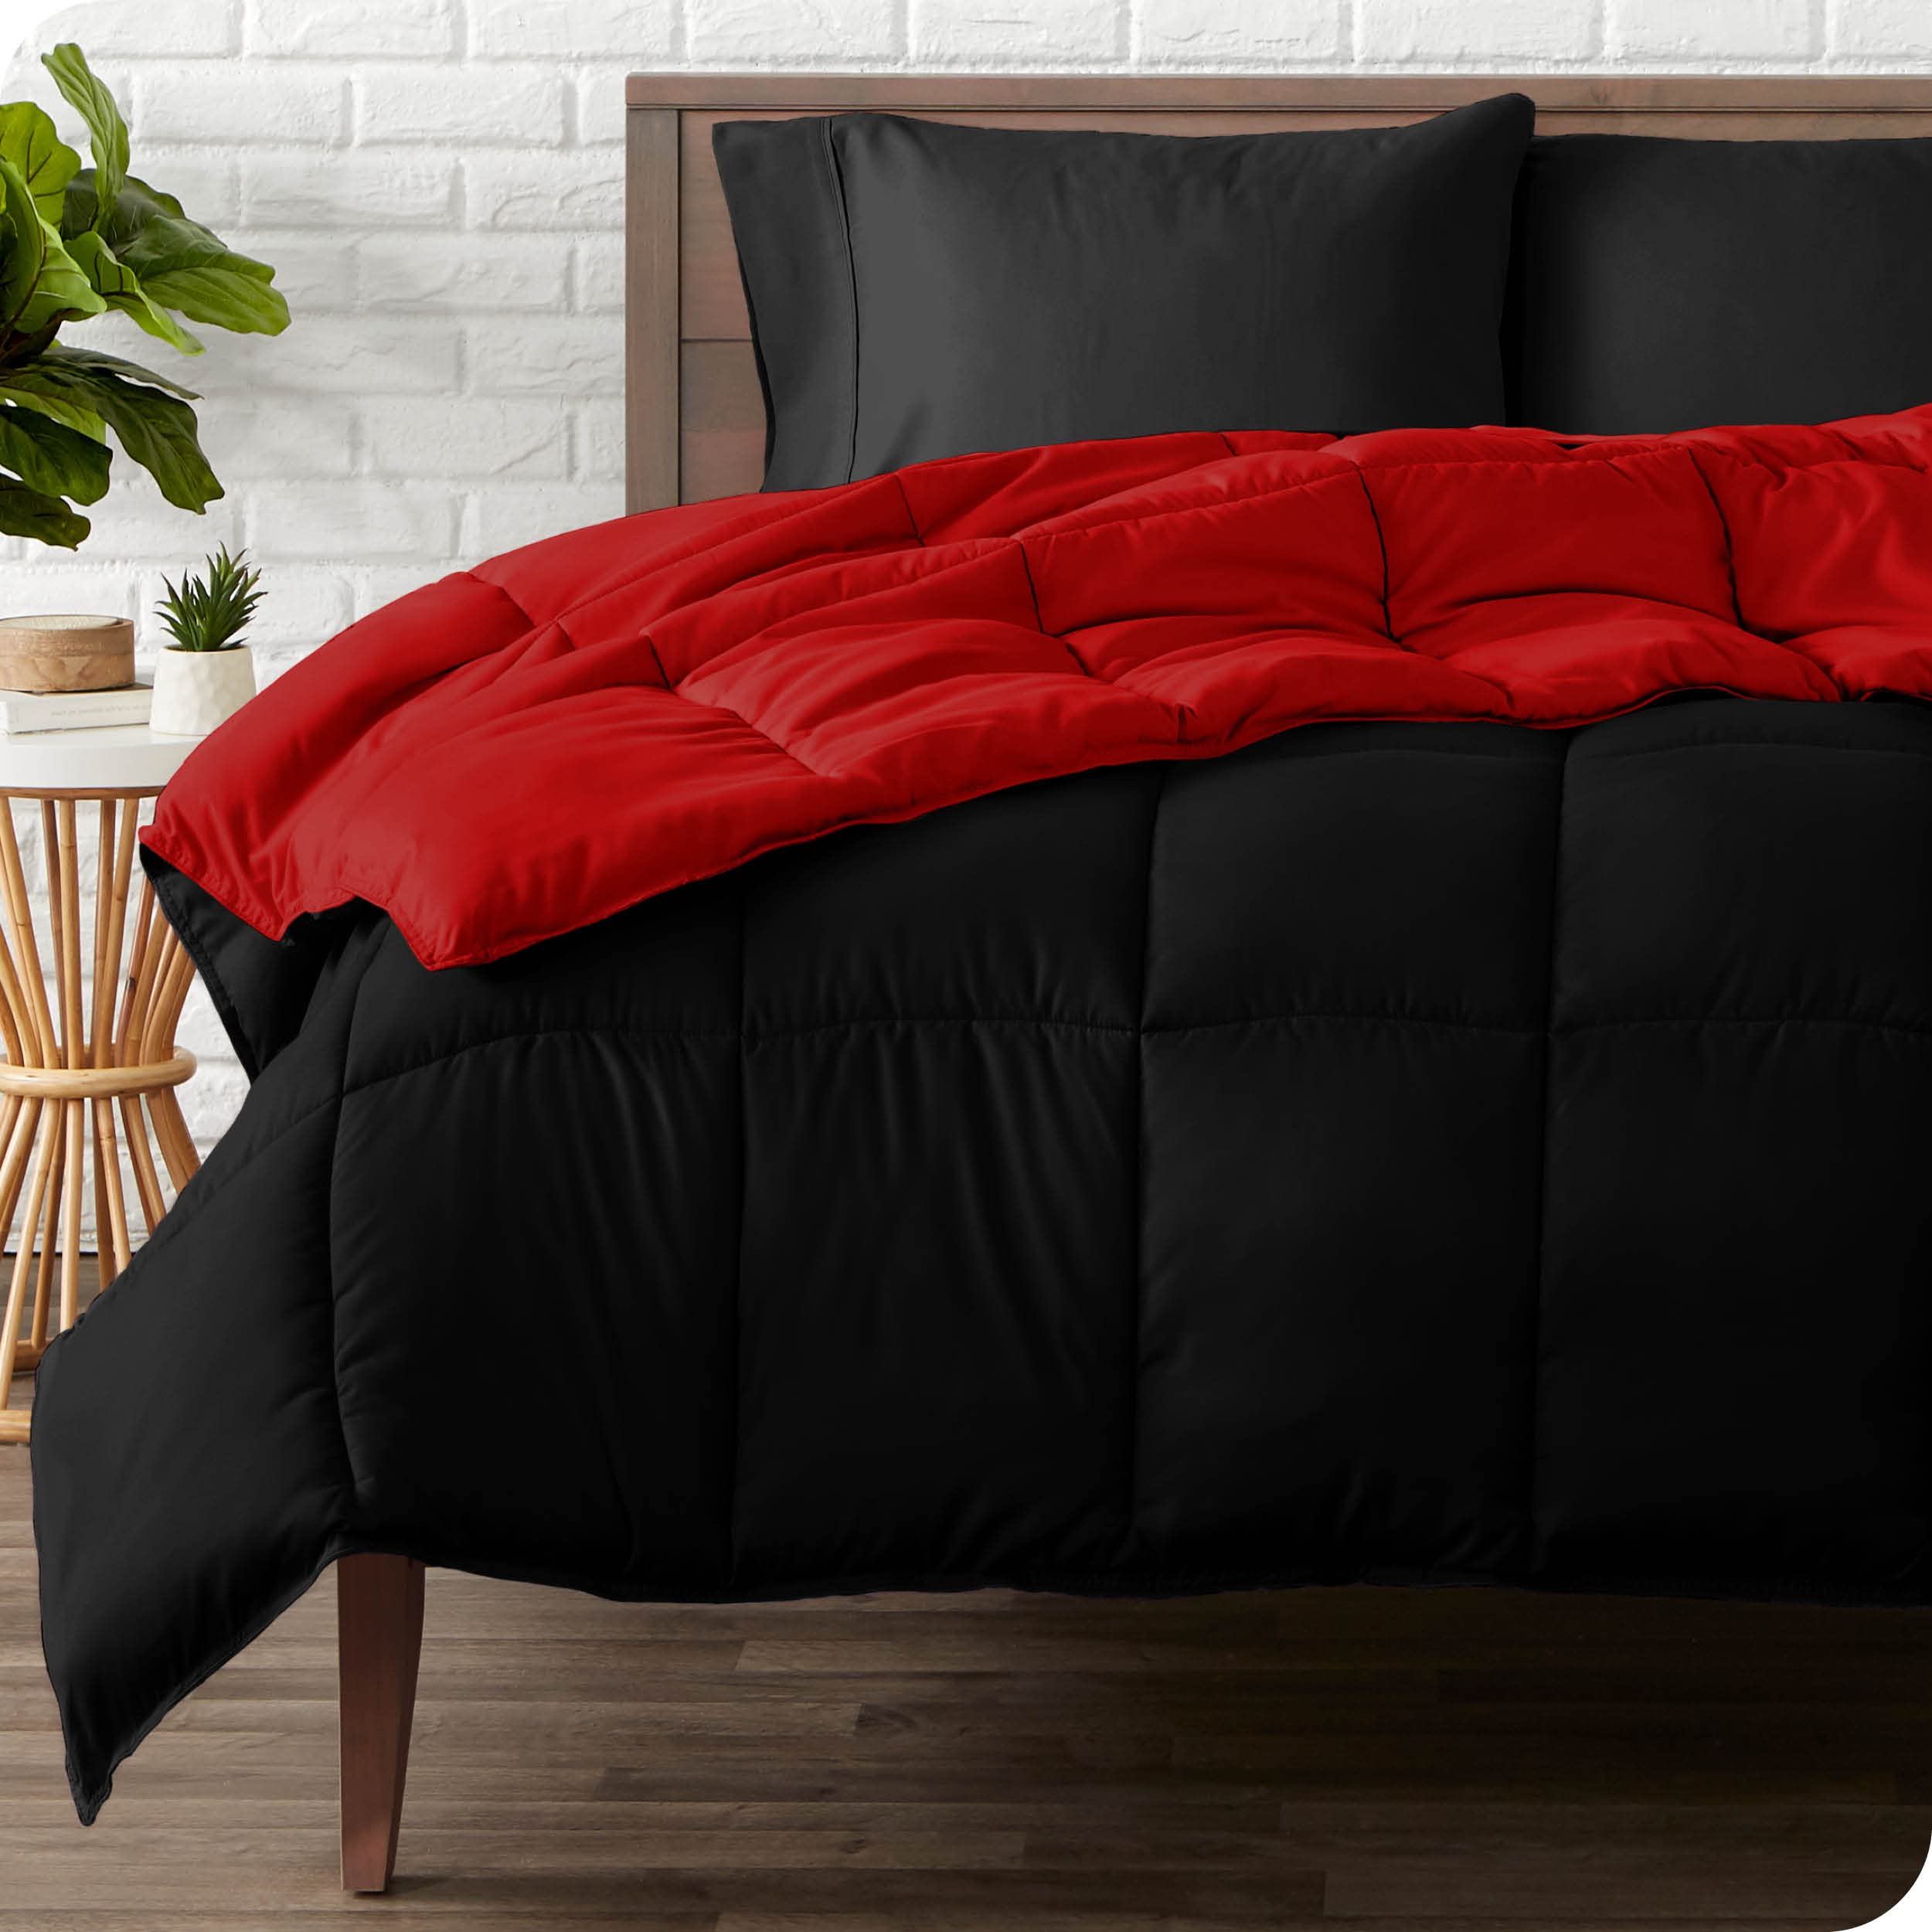 Book Cover Bare Home Full Comforter - Reversible Colors - Goose Down Alternative - Ultra-Soft - Premium 1800 Series - All Season Warmth - Bedding Comforter (Full, Black/Red) Full 07 - Black/Red